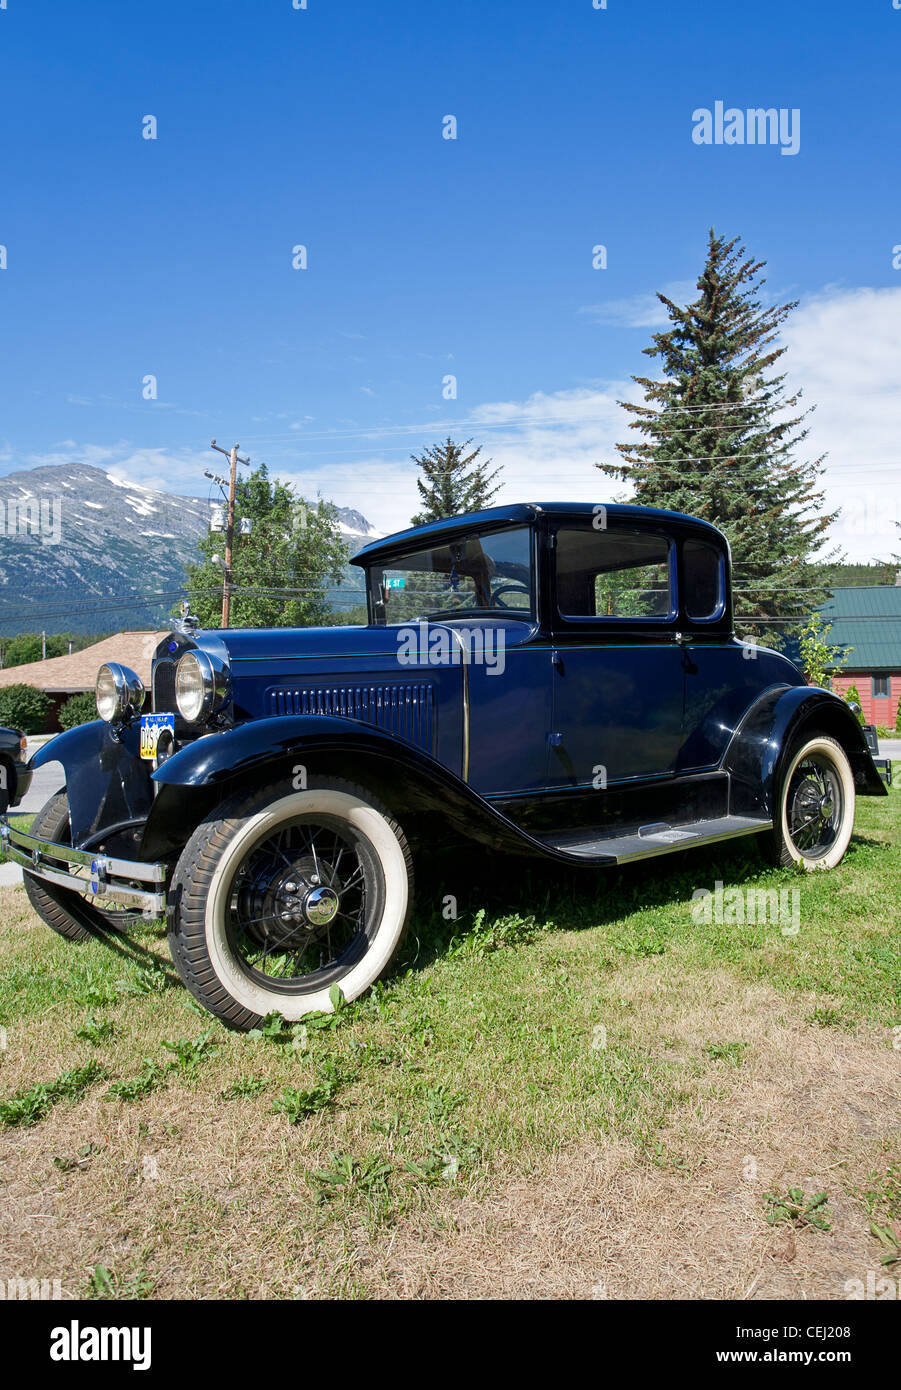 Ford car historic model. Skagway. Alaska. USA Stock Photo